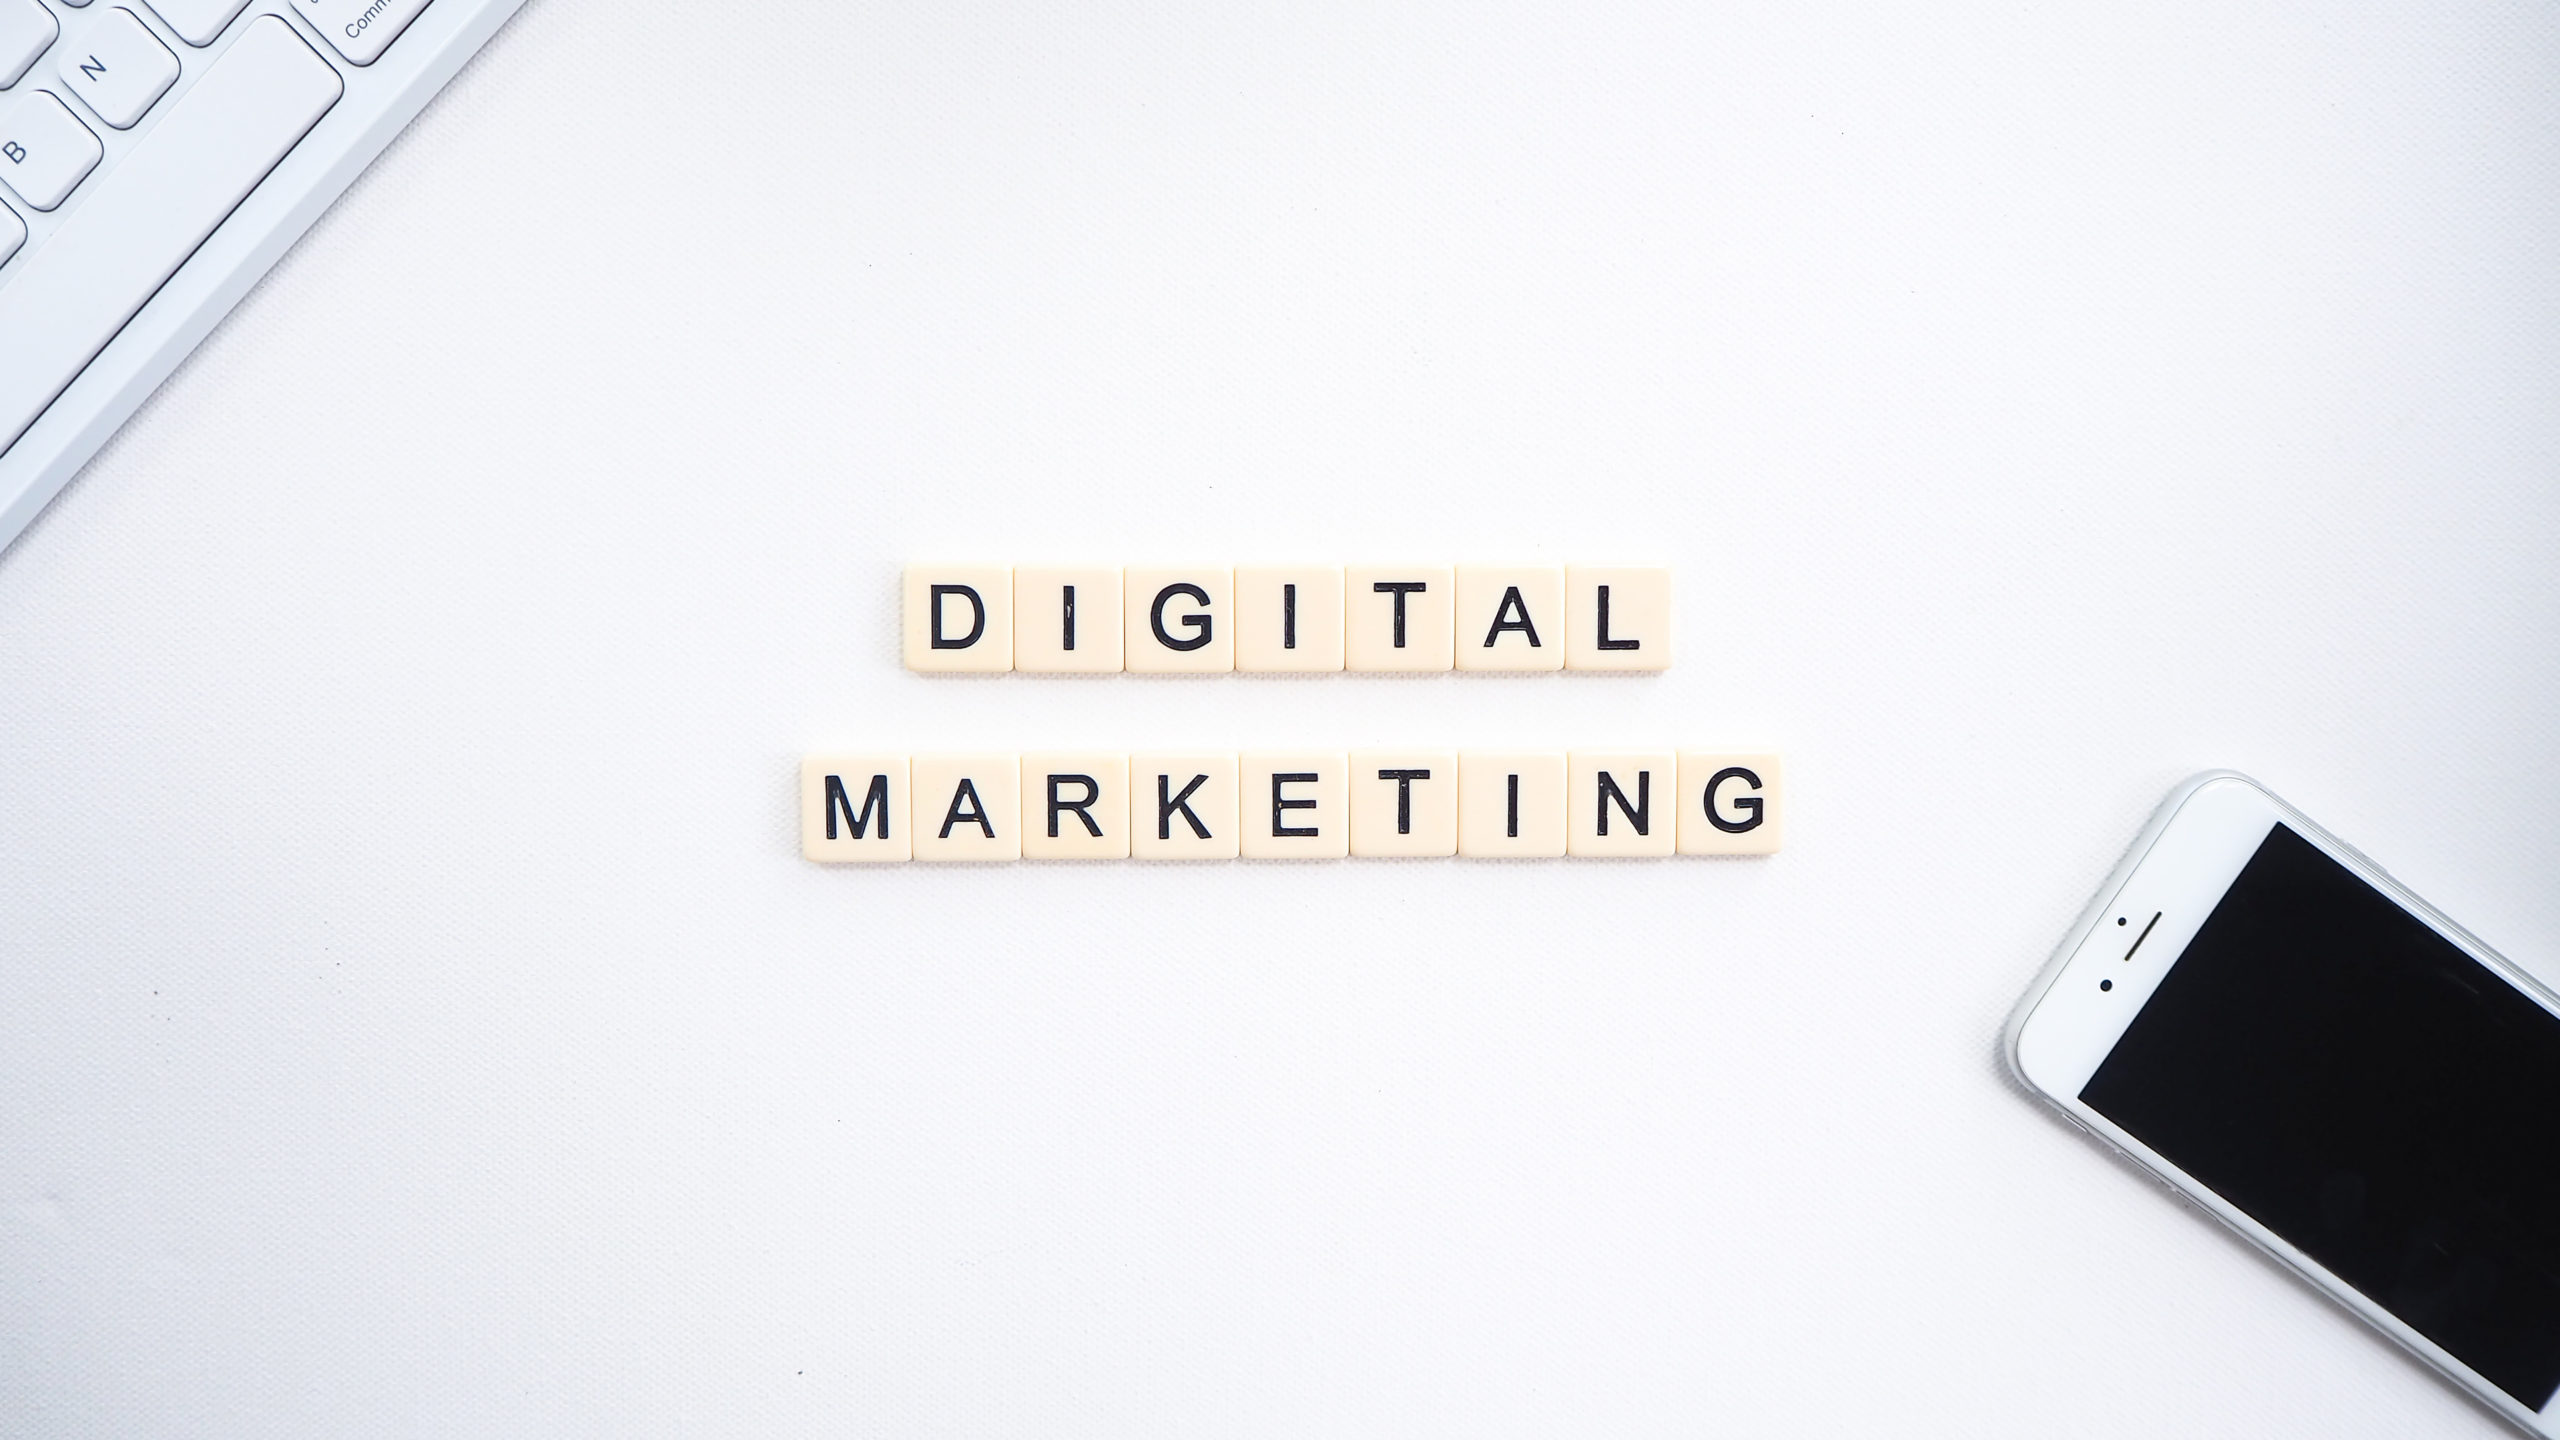 300 per cent ROI in digital marketing for FMCG